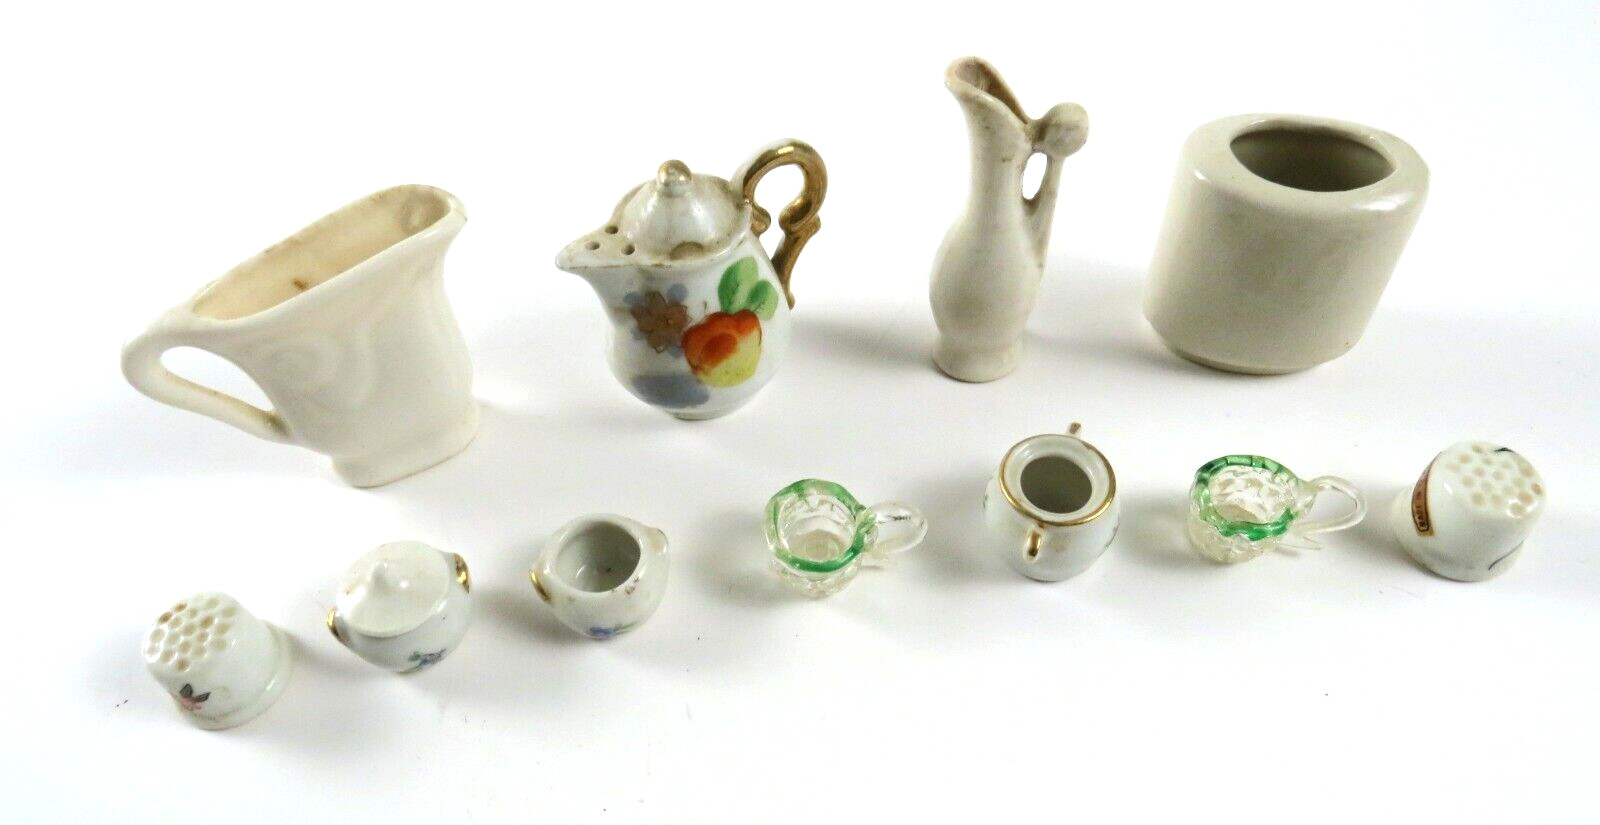 Miniature Ceramic & Glass Dollhouse/Decor Items, Vases, Cups, Thimbles, Urns etc